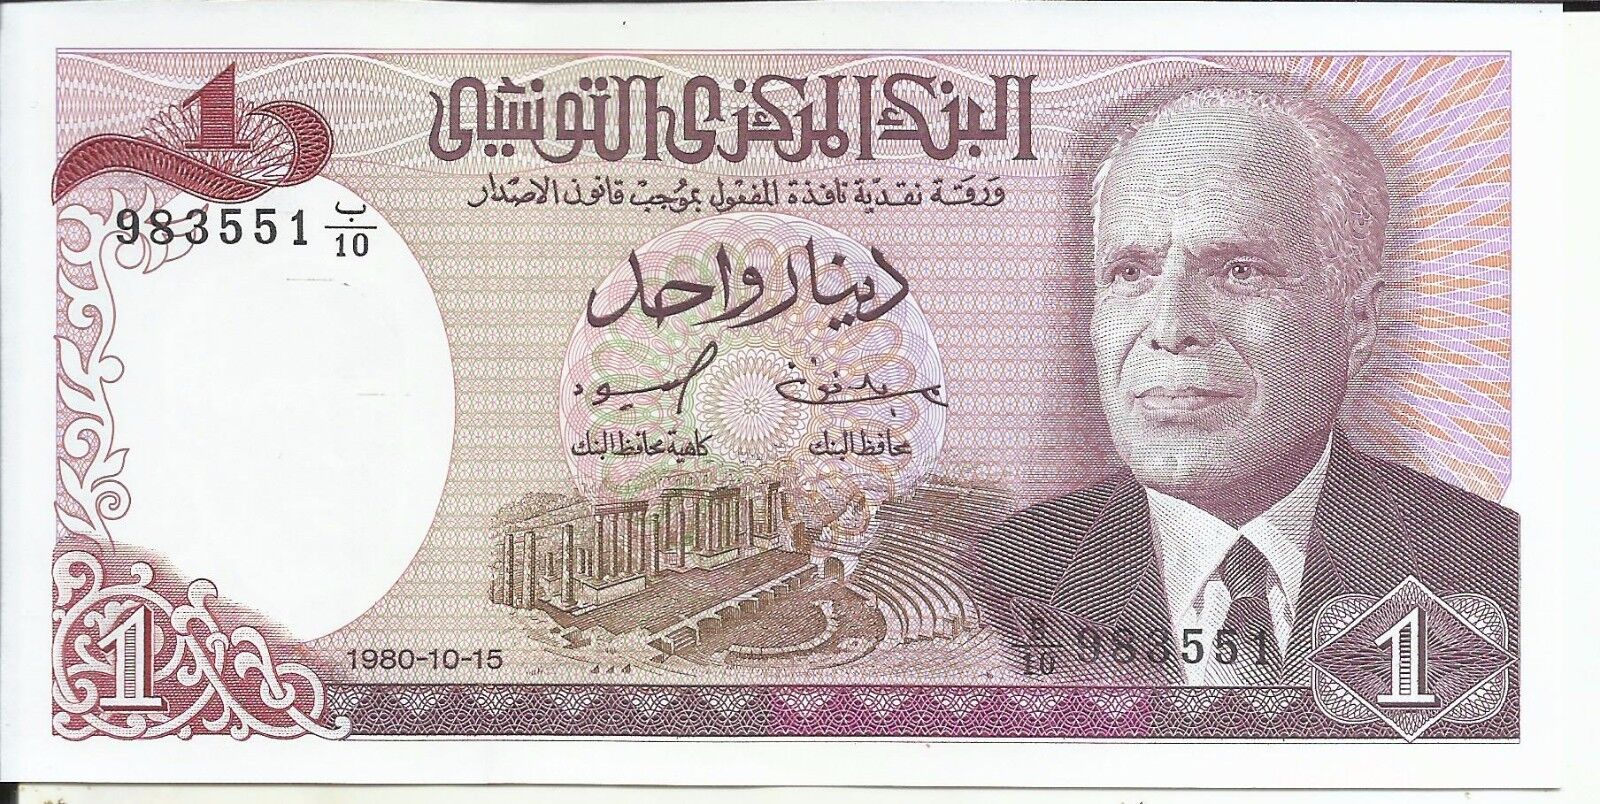 Tunisia 1 Dinar 1980  P 74. Unc Condition.  5rw 23oct